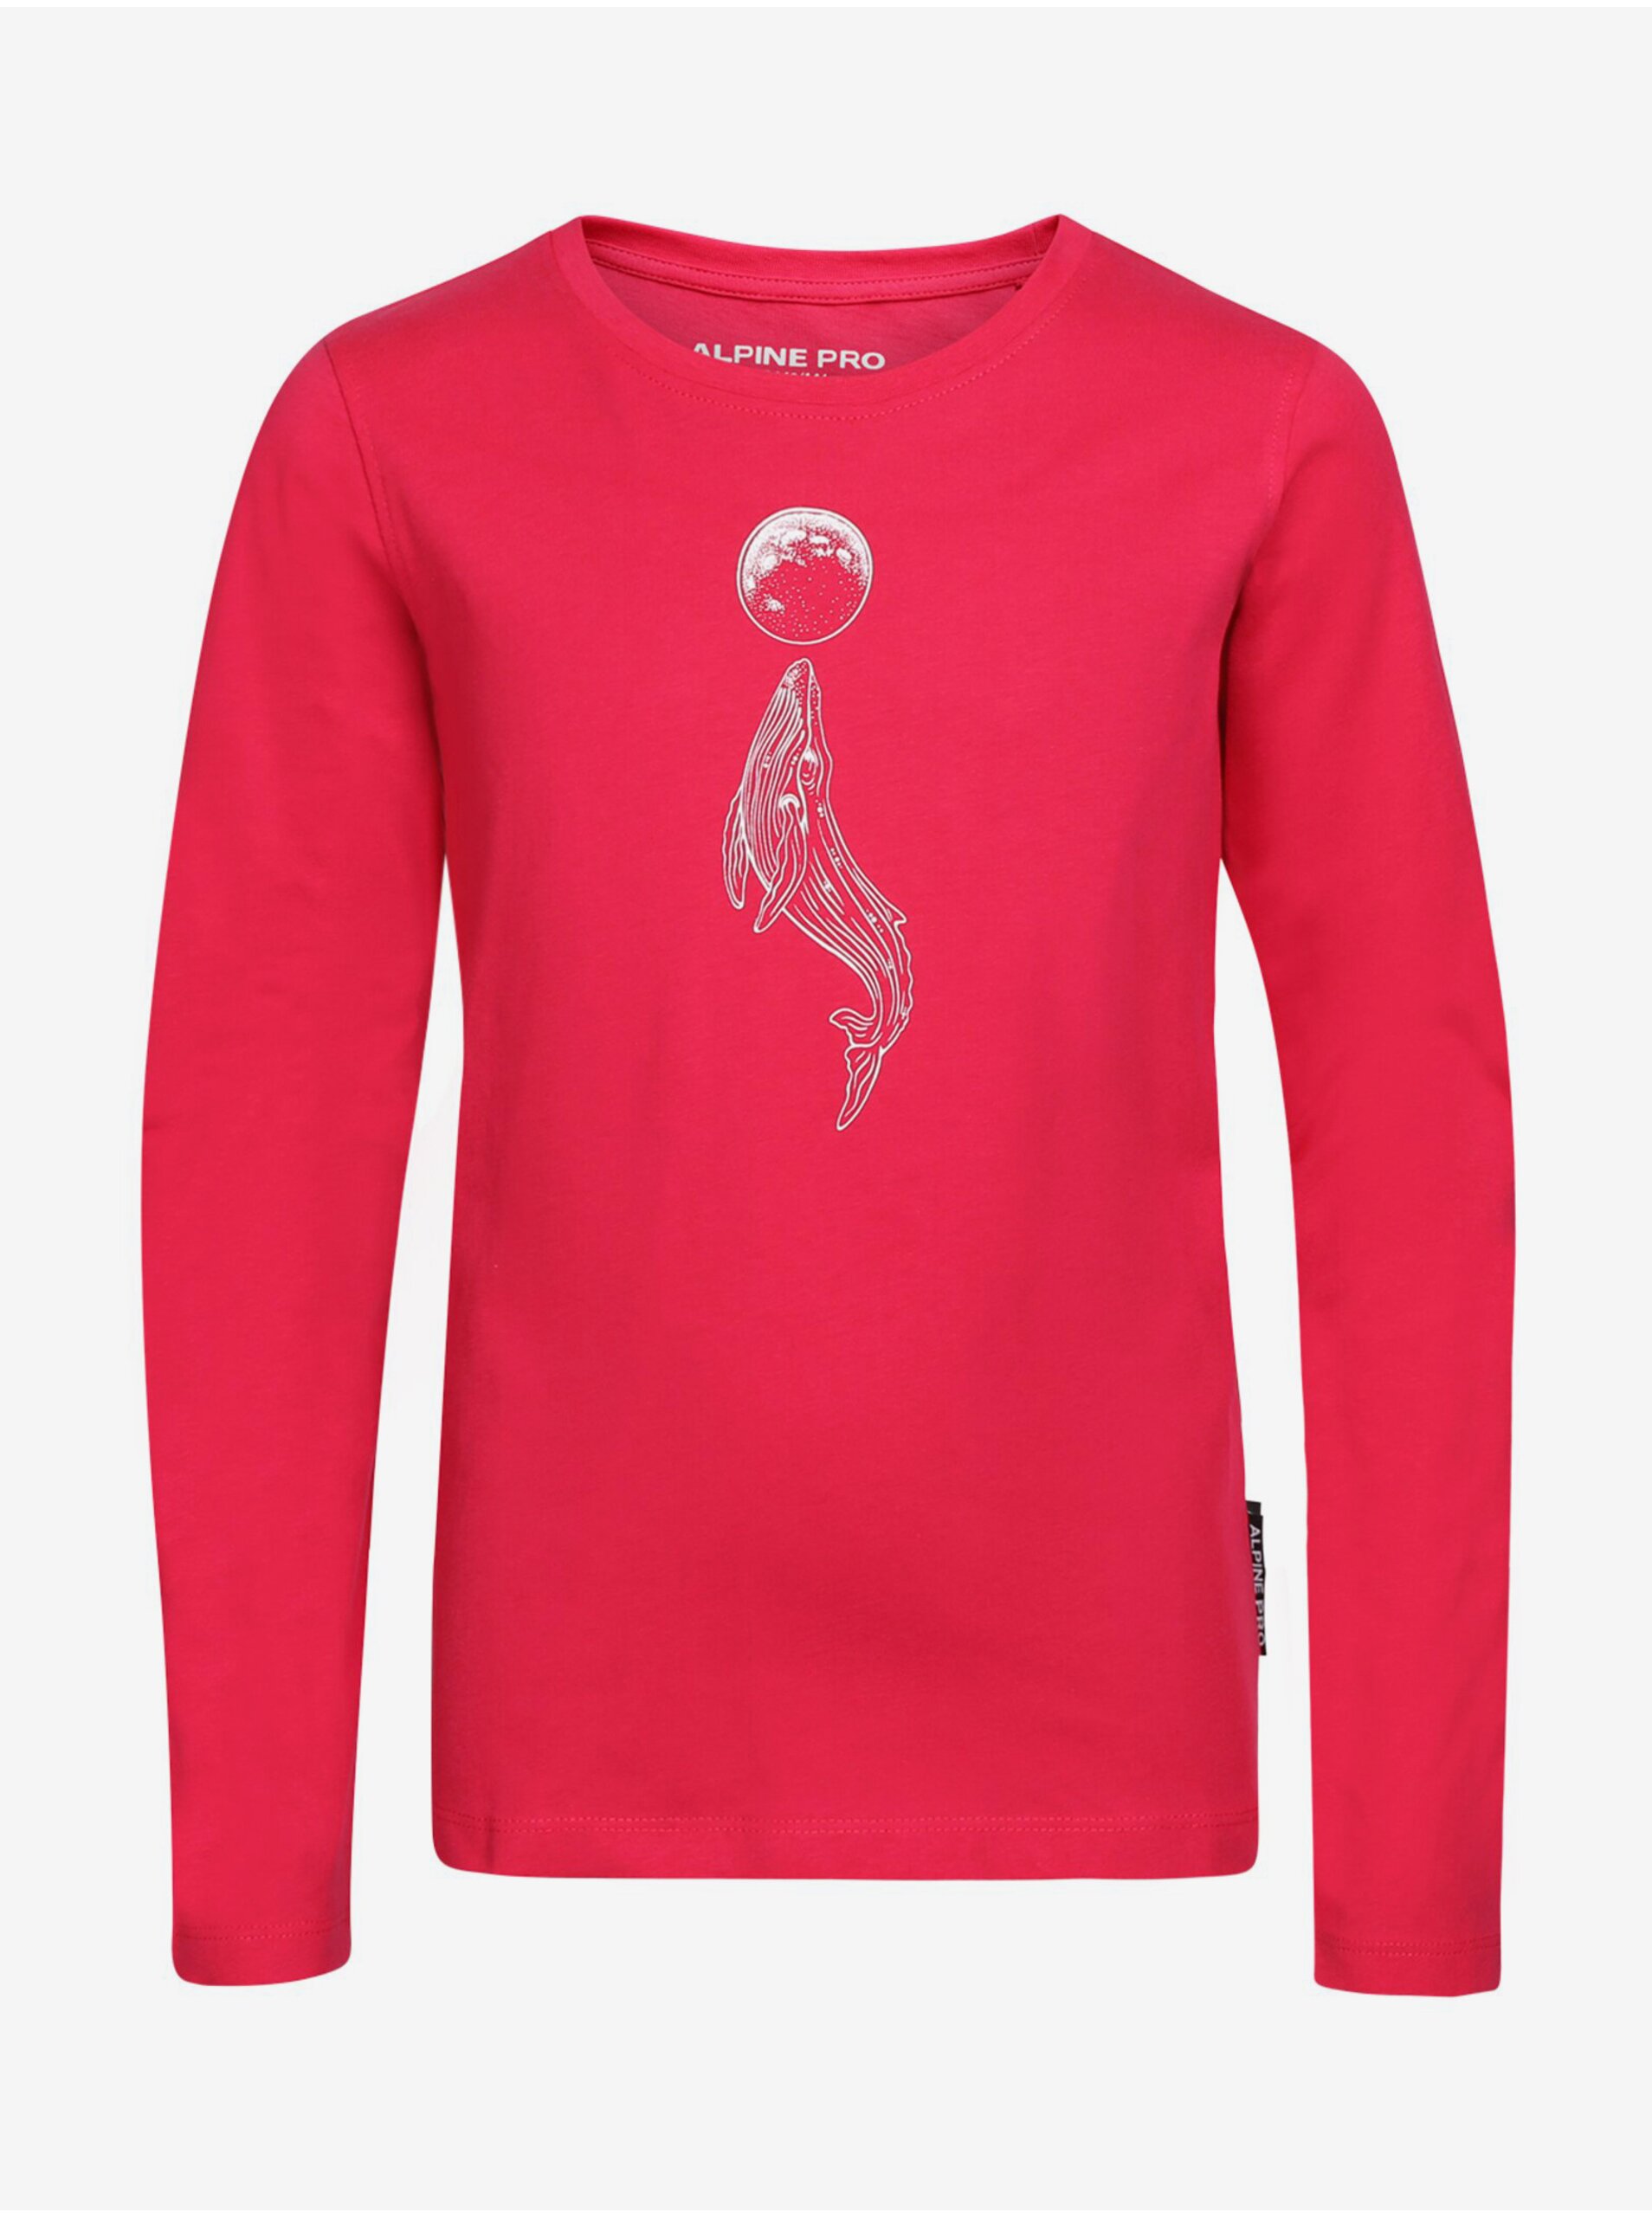 Lacno Tmavo ružové dievčenské tričko ALPINE PRO Olero